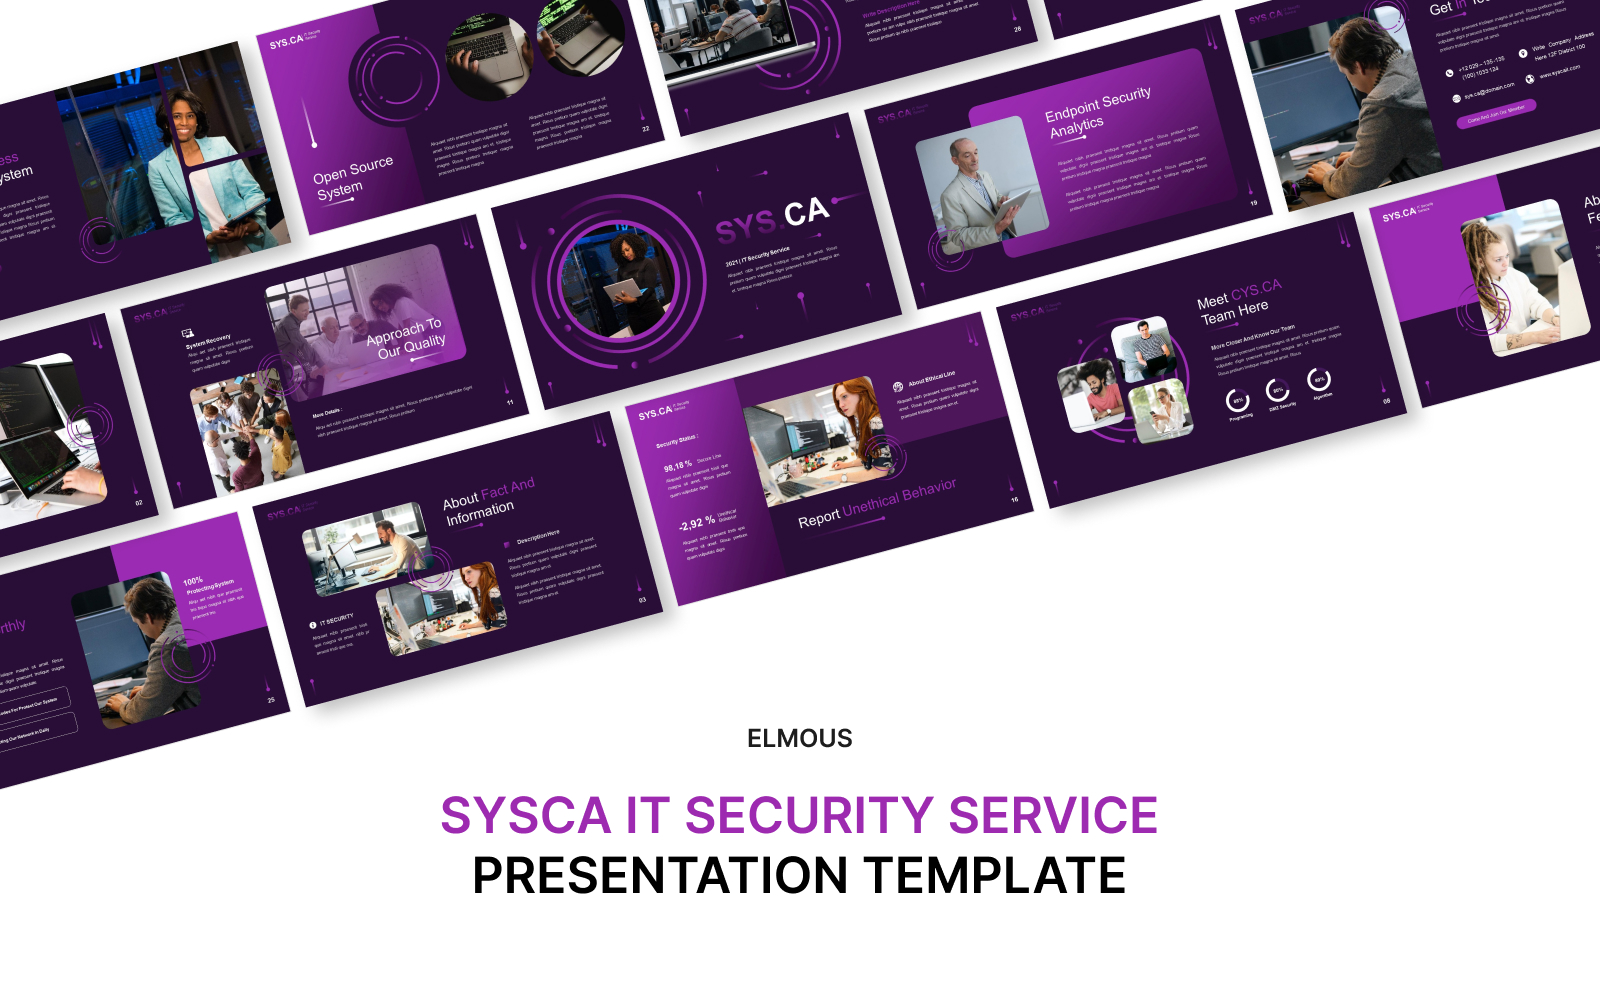 Sysca IT Security Service Google Slide Presentation Template